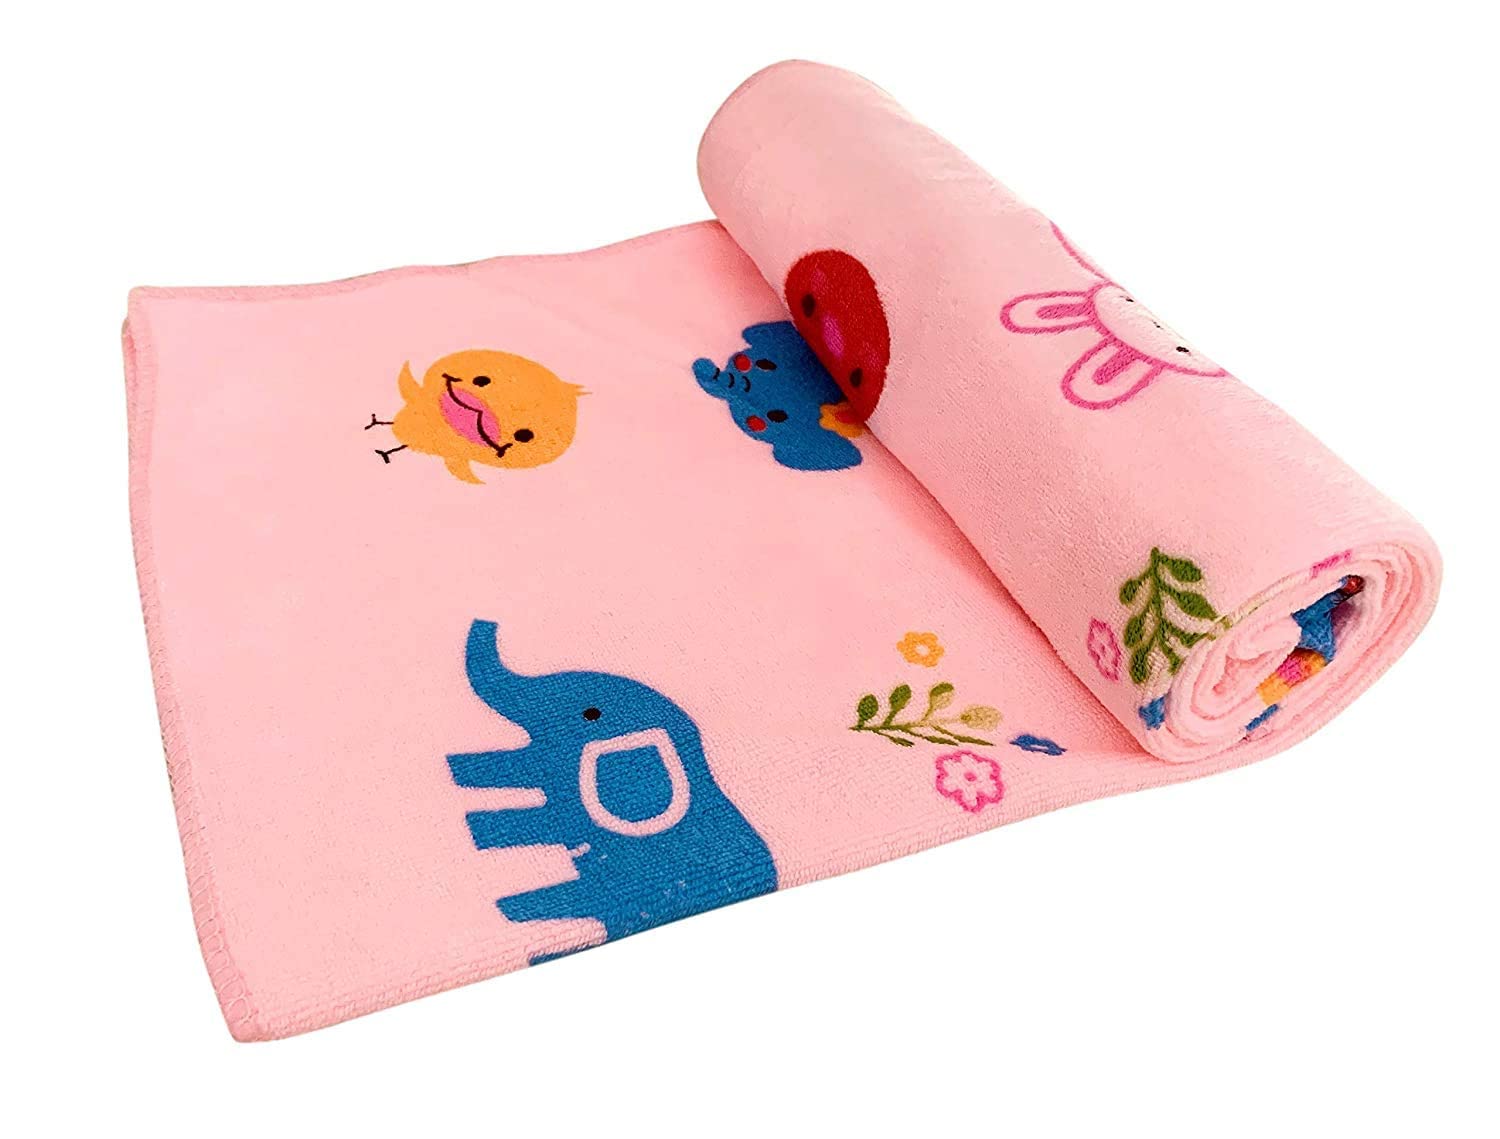 Baby Bath Towel Manufacturers in Noida